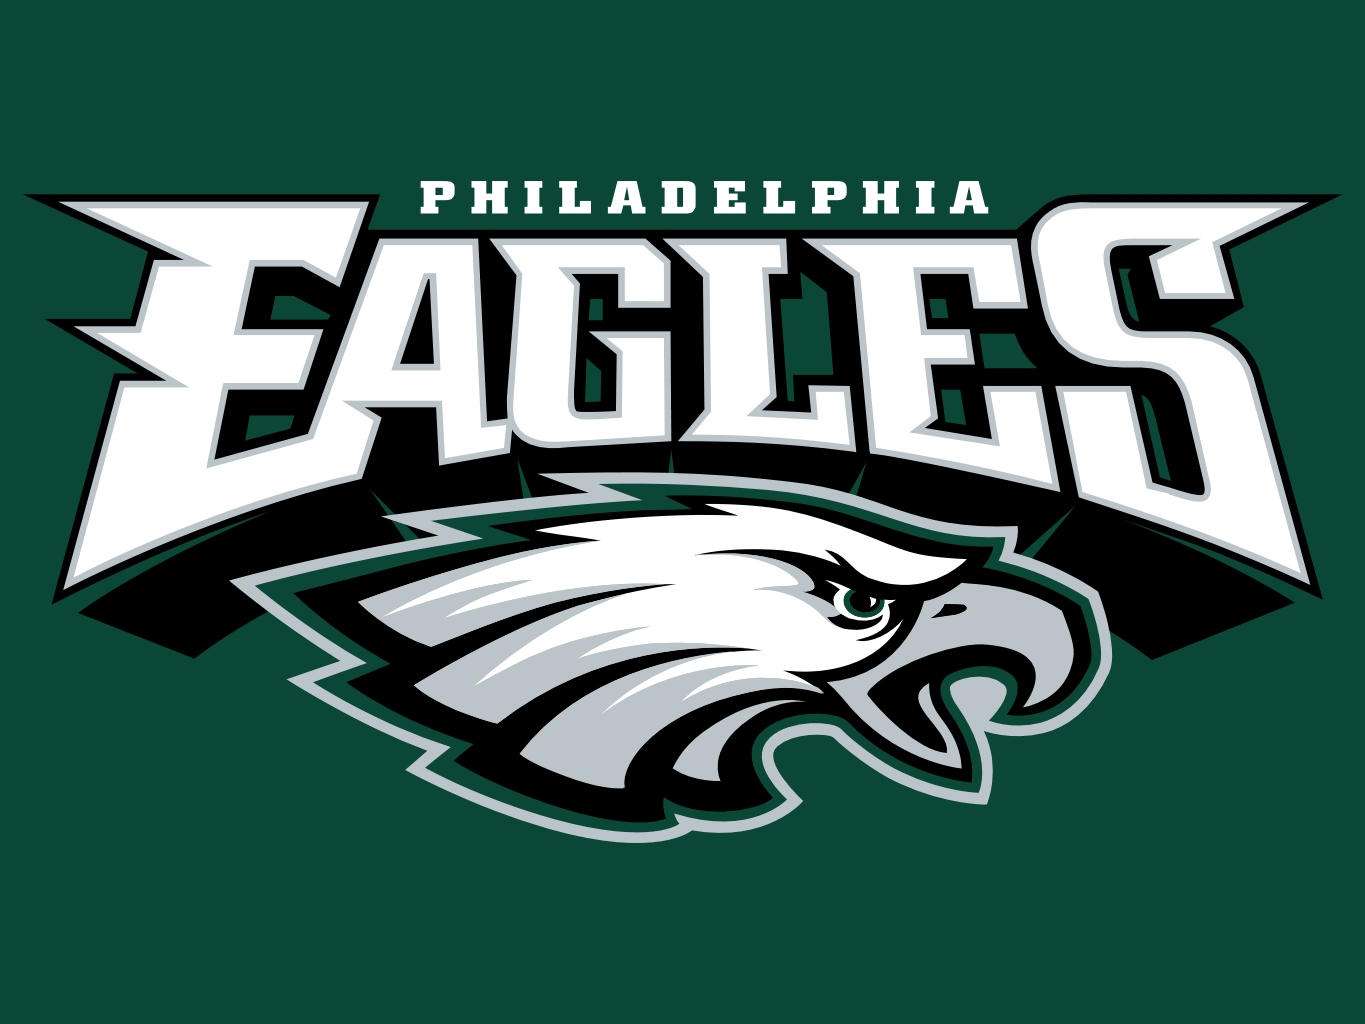 All the teams - Phila.  Philadelphia eagles wallpaper, Philadelphia eagles  football, Philly eagles